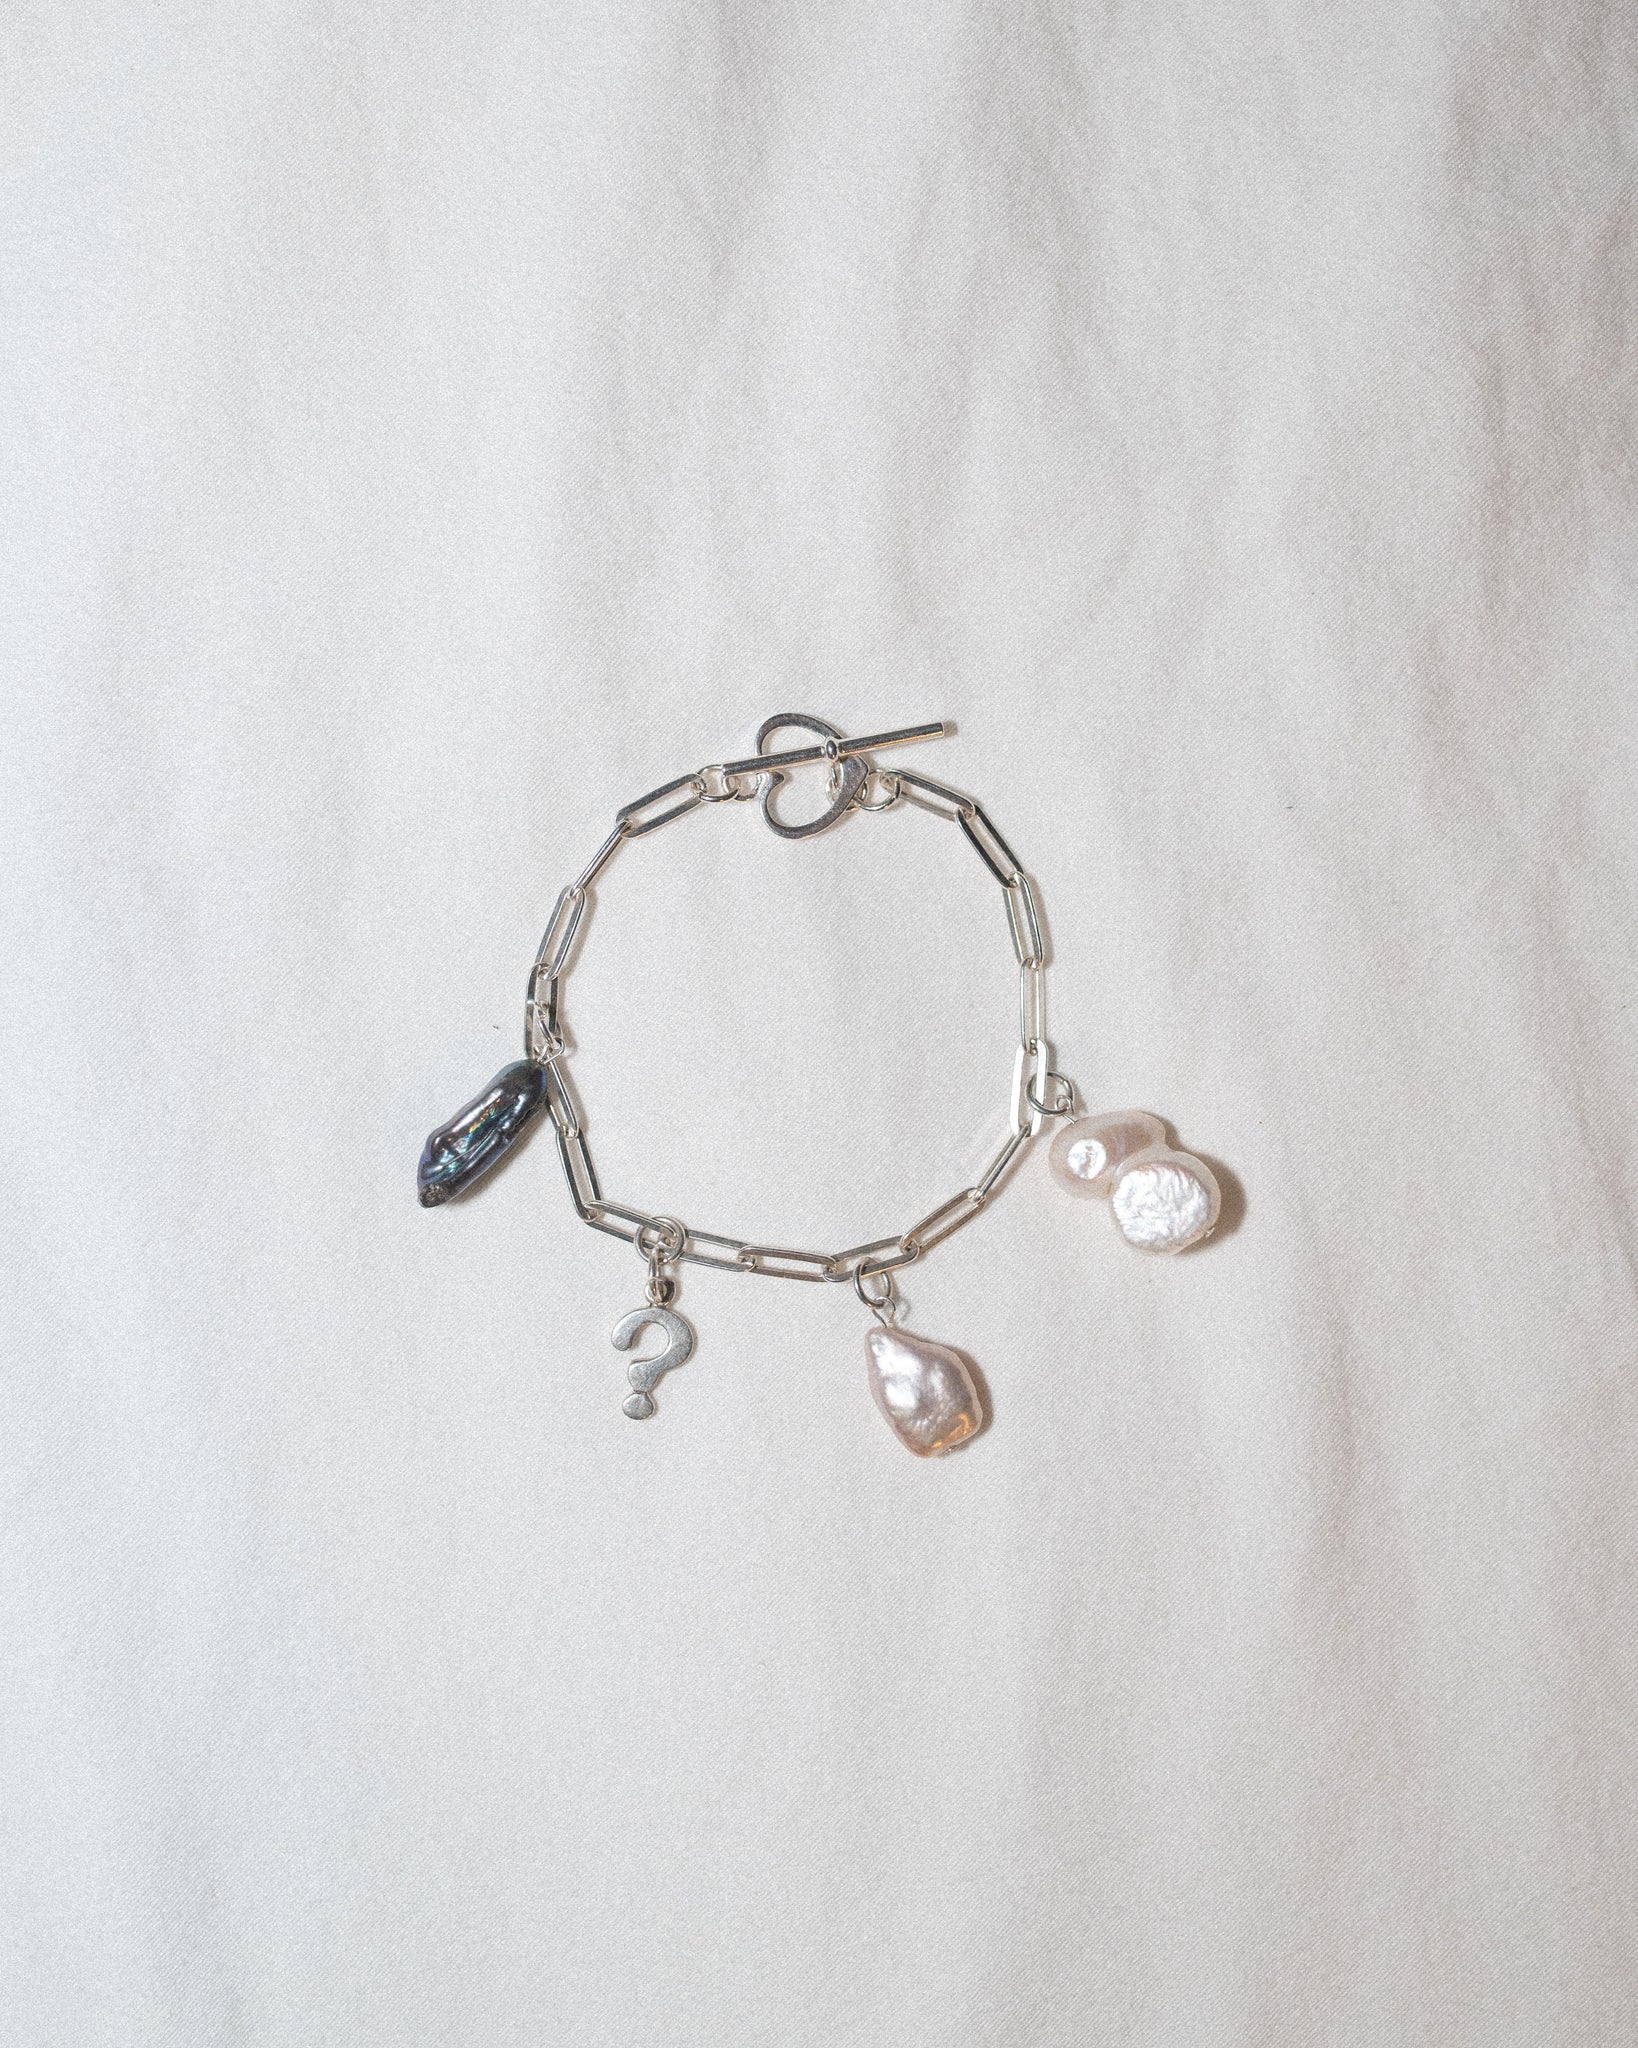 Guess Who | Chain Charm Bracelet